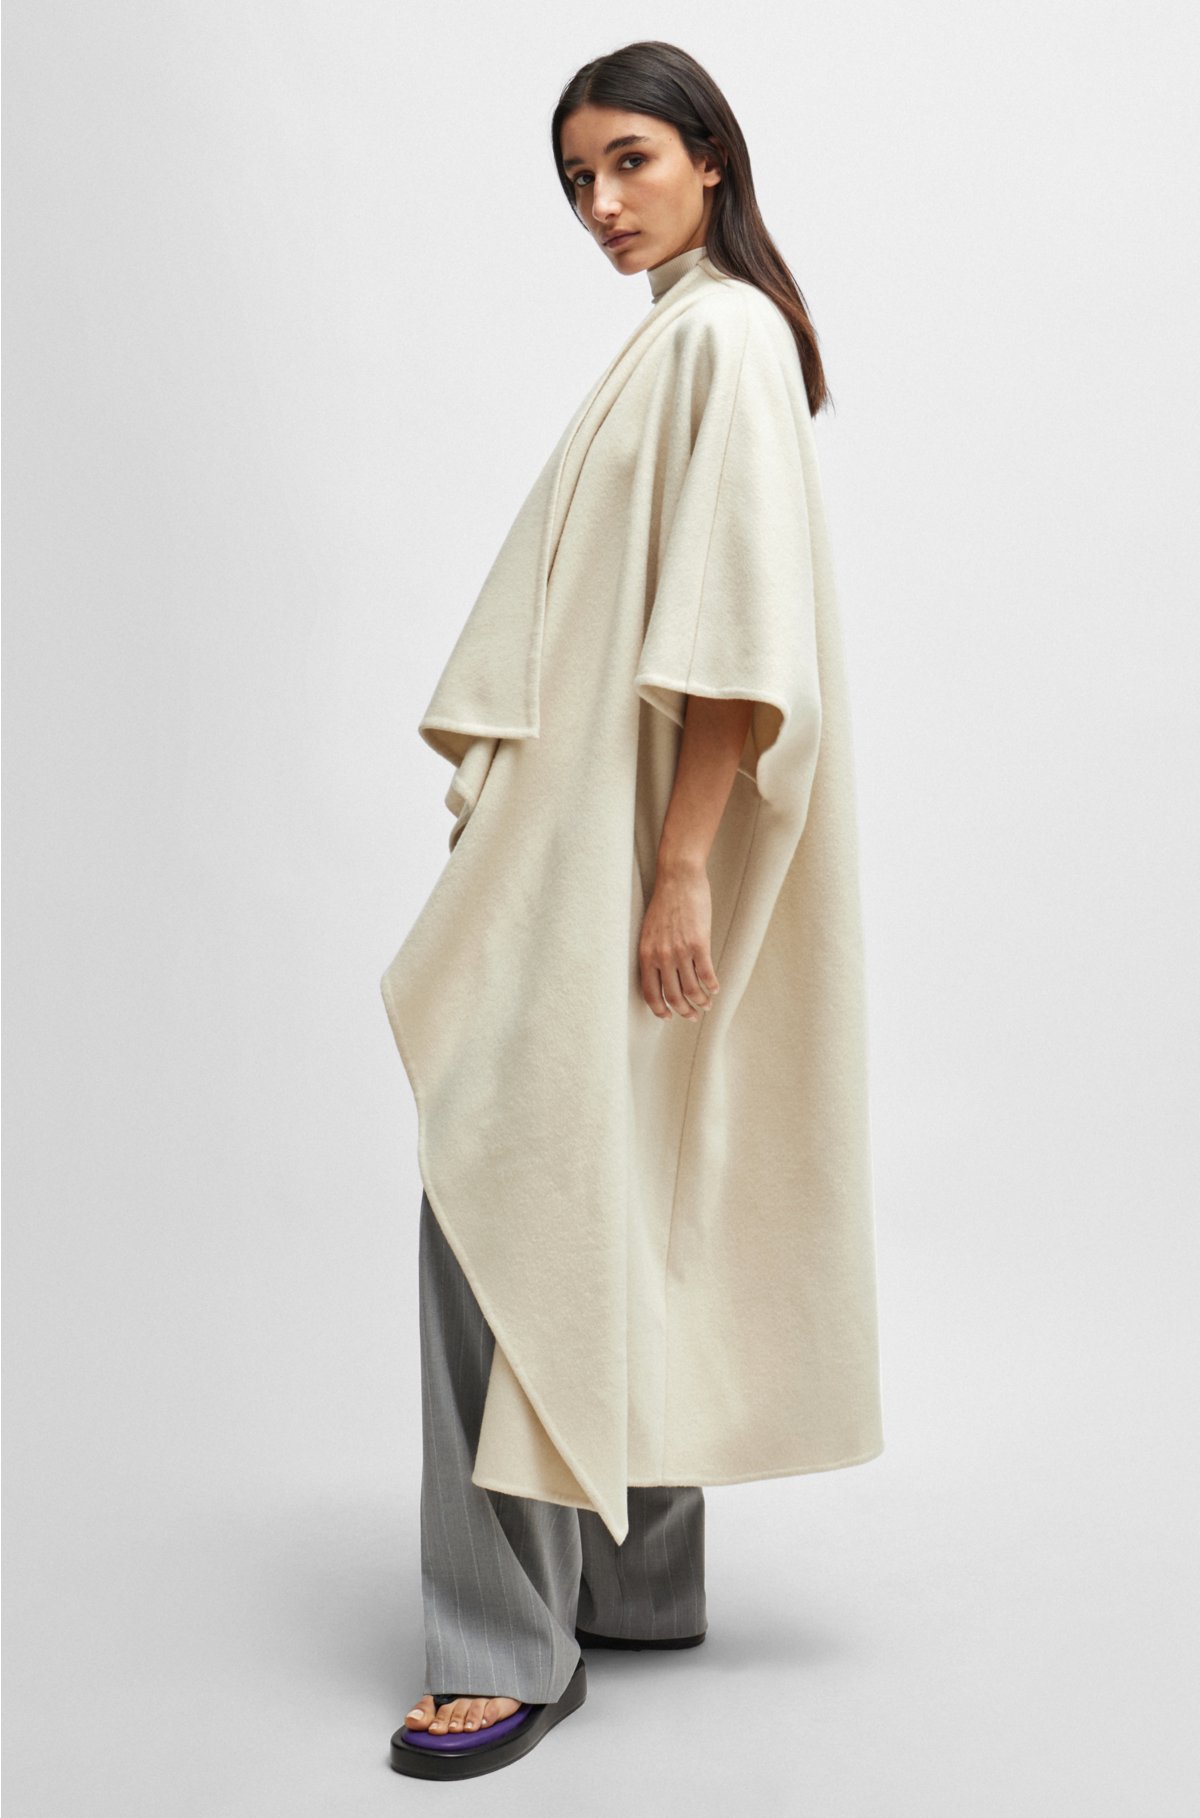 NAOMI x BOSS waterfall-front cape coat in virgin wool, Natural